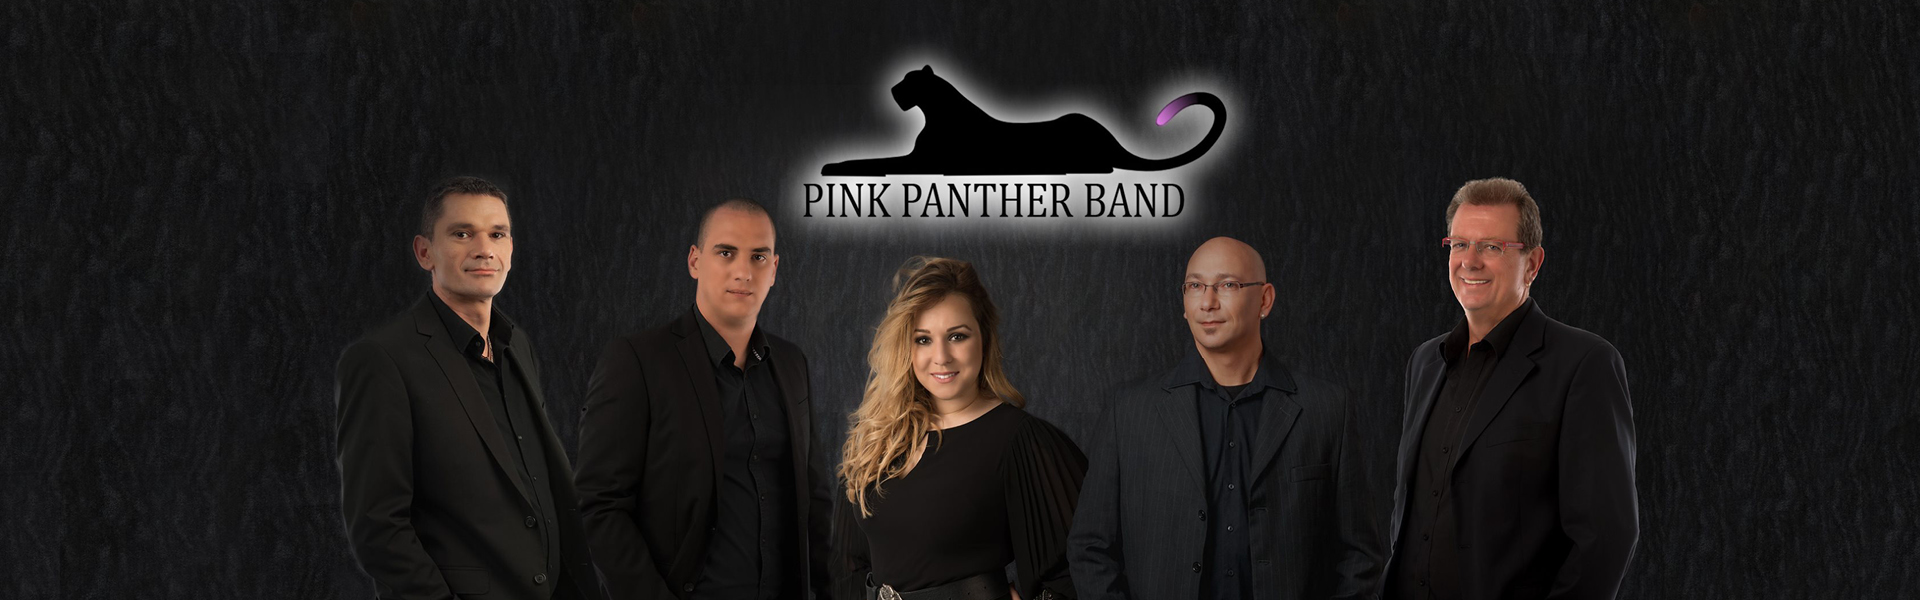 Pink Panther Band